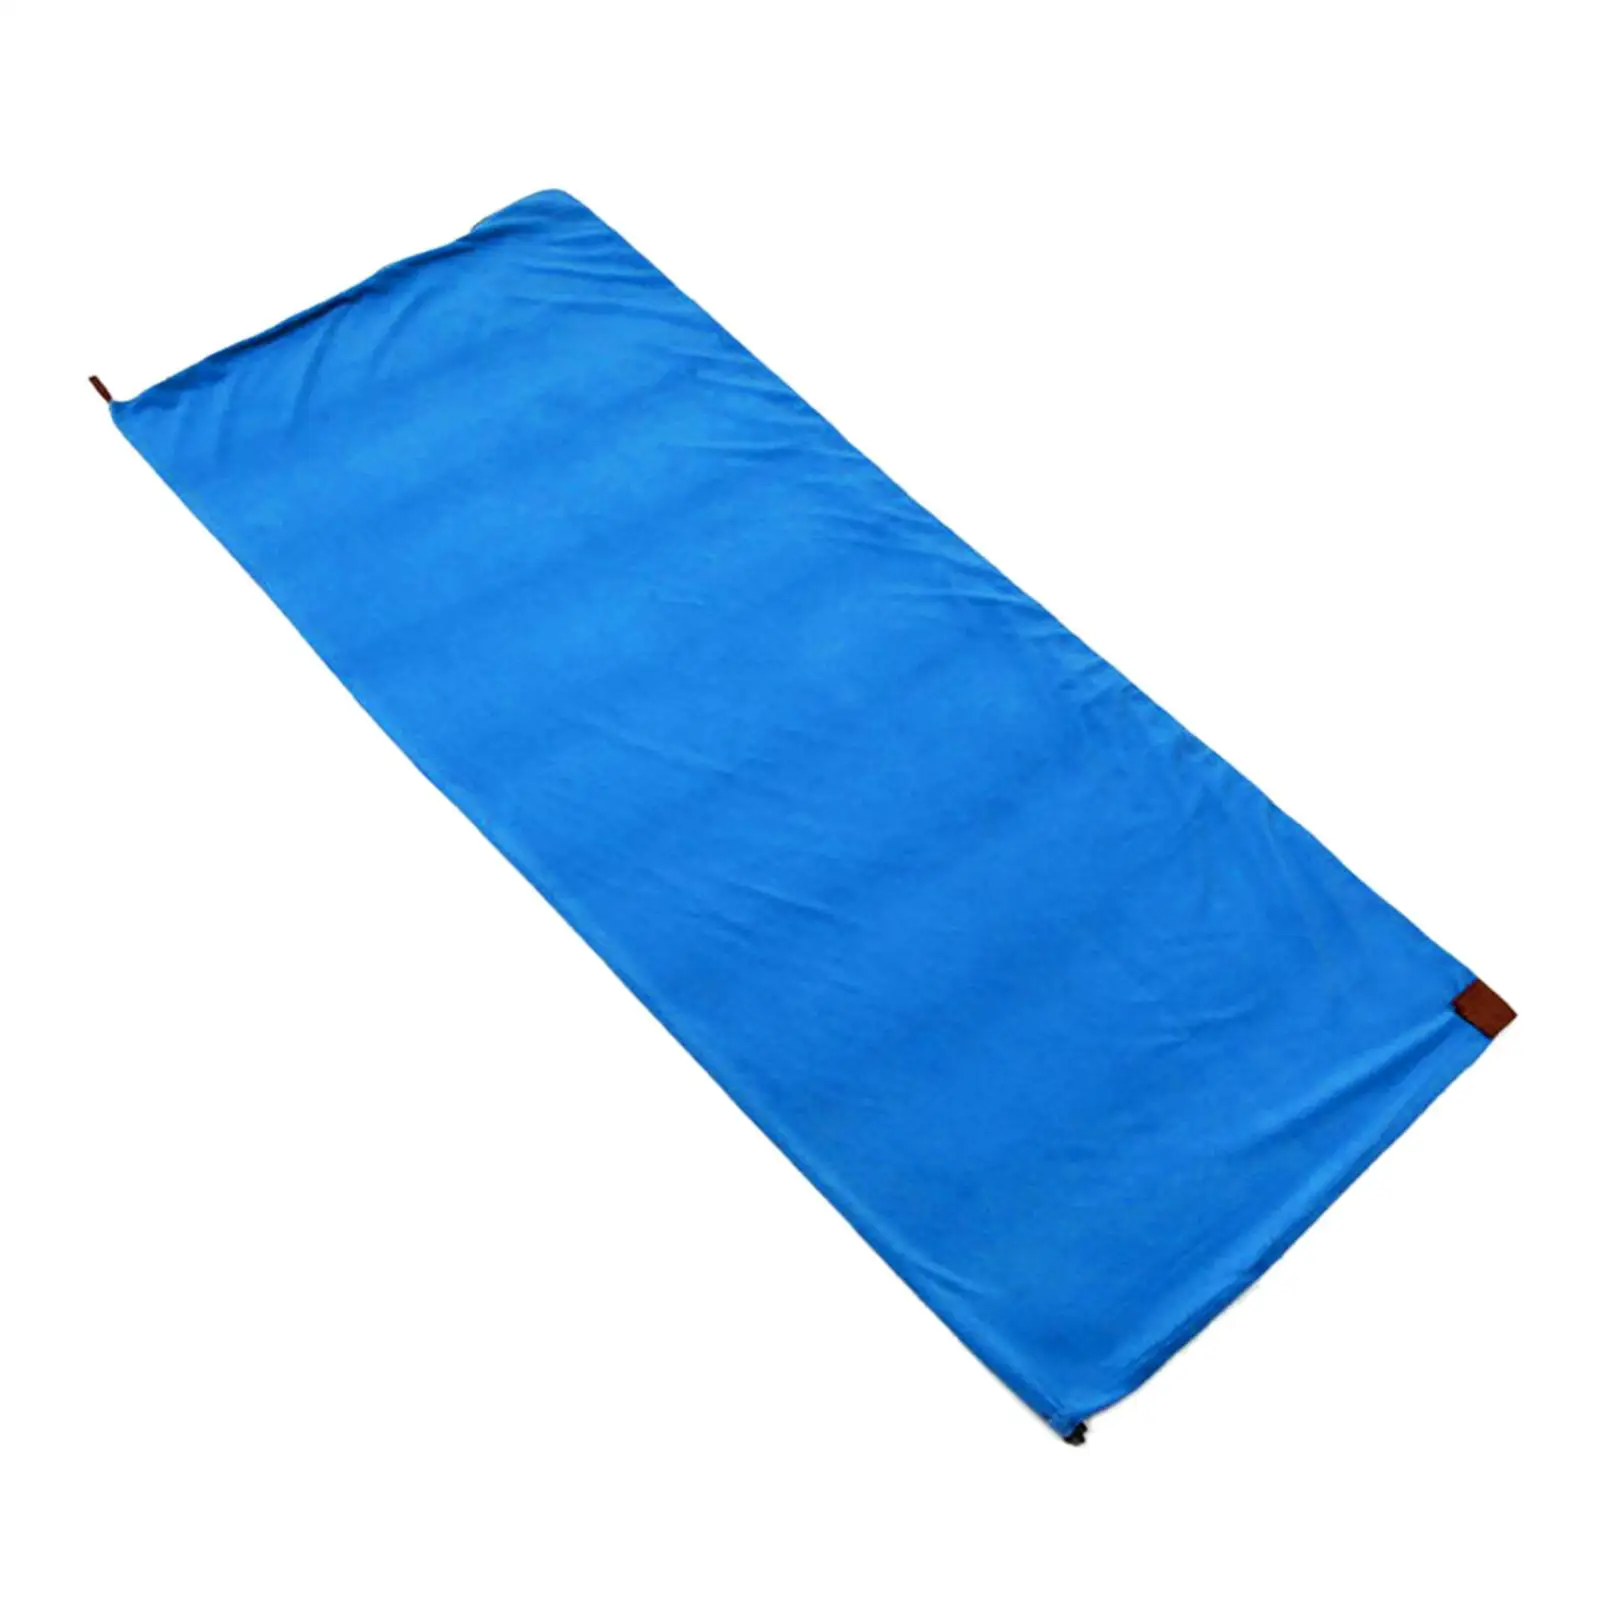 Camping Blanket Cushion Thermal Trips Outdoor Soft Fleece Sleeping Bag Liner